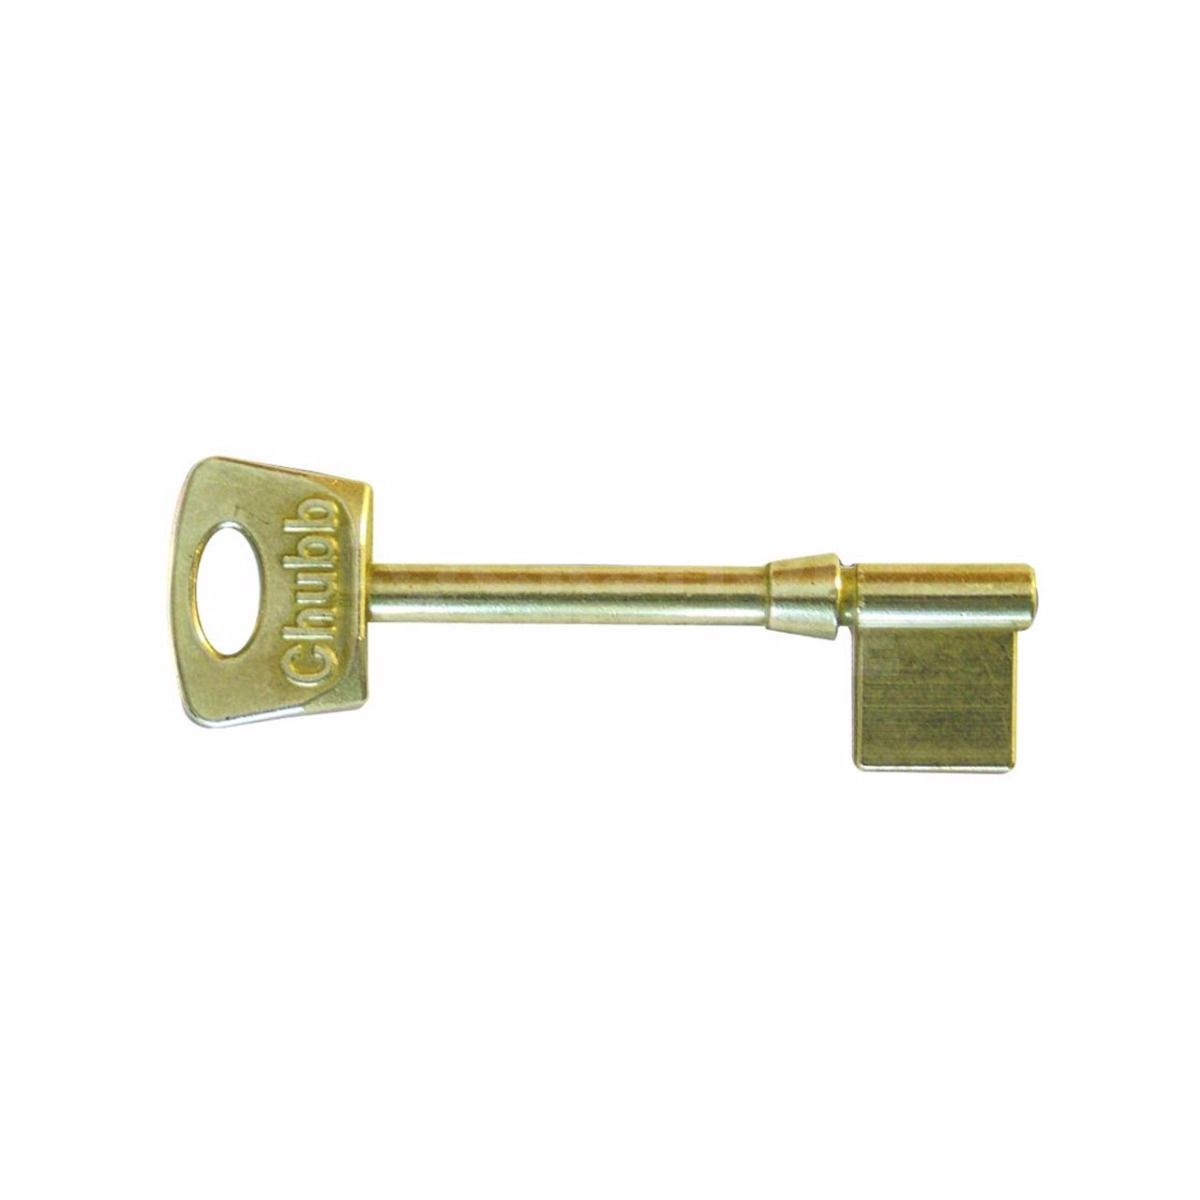 Extra Key for Union 5 Lever locks